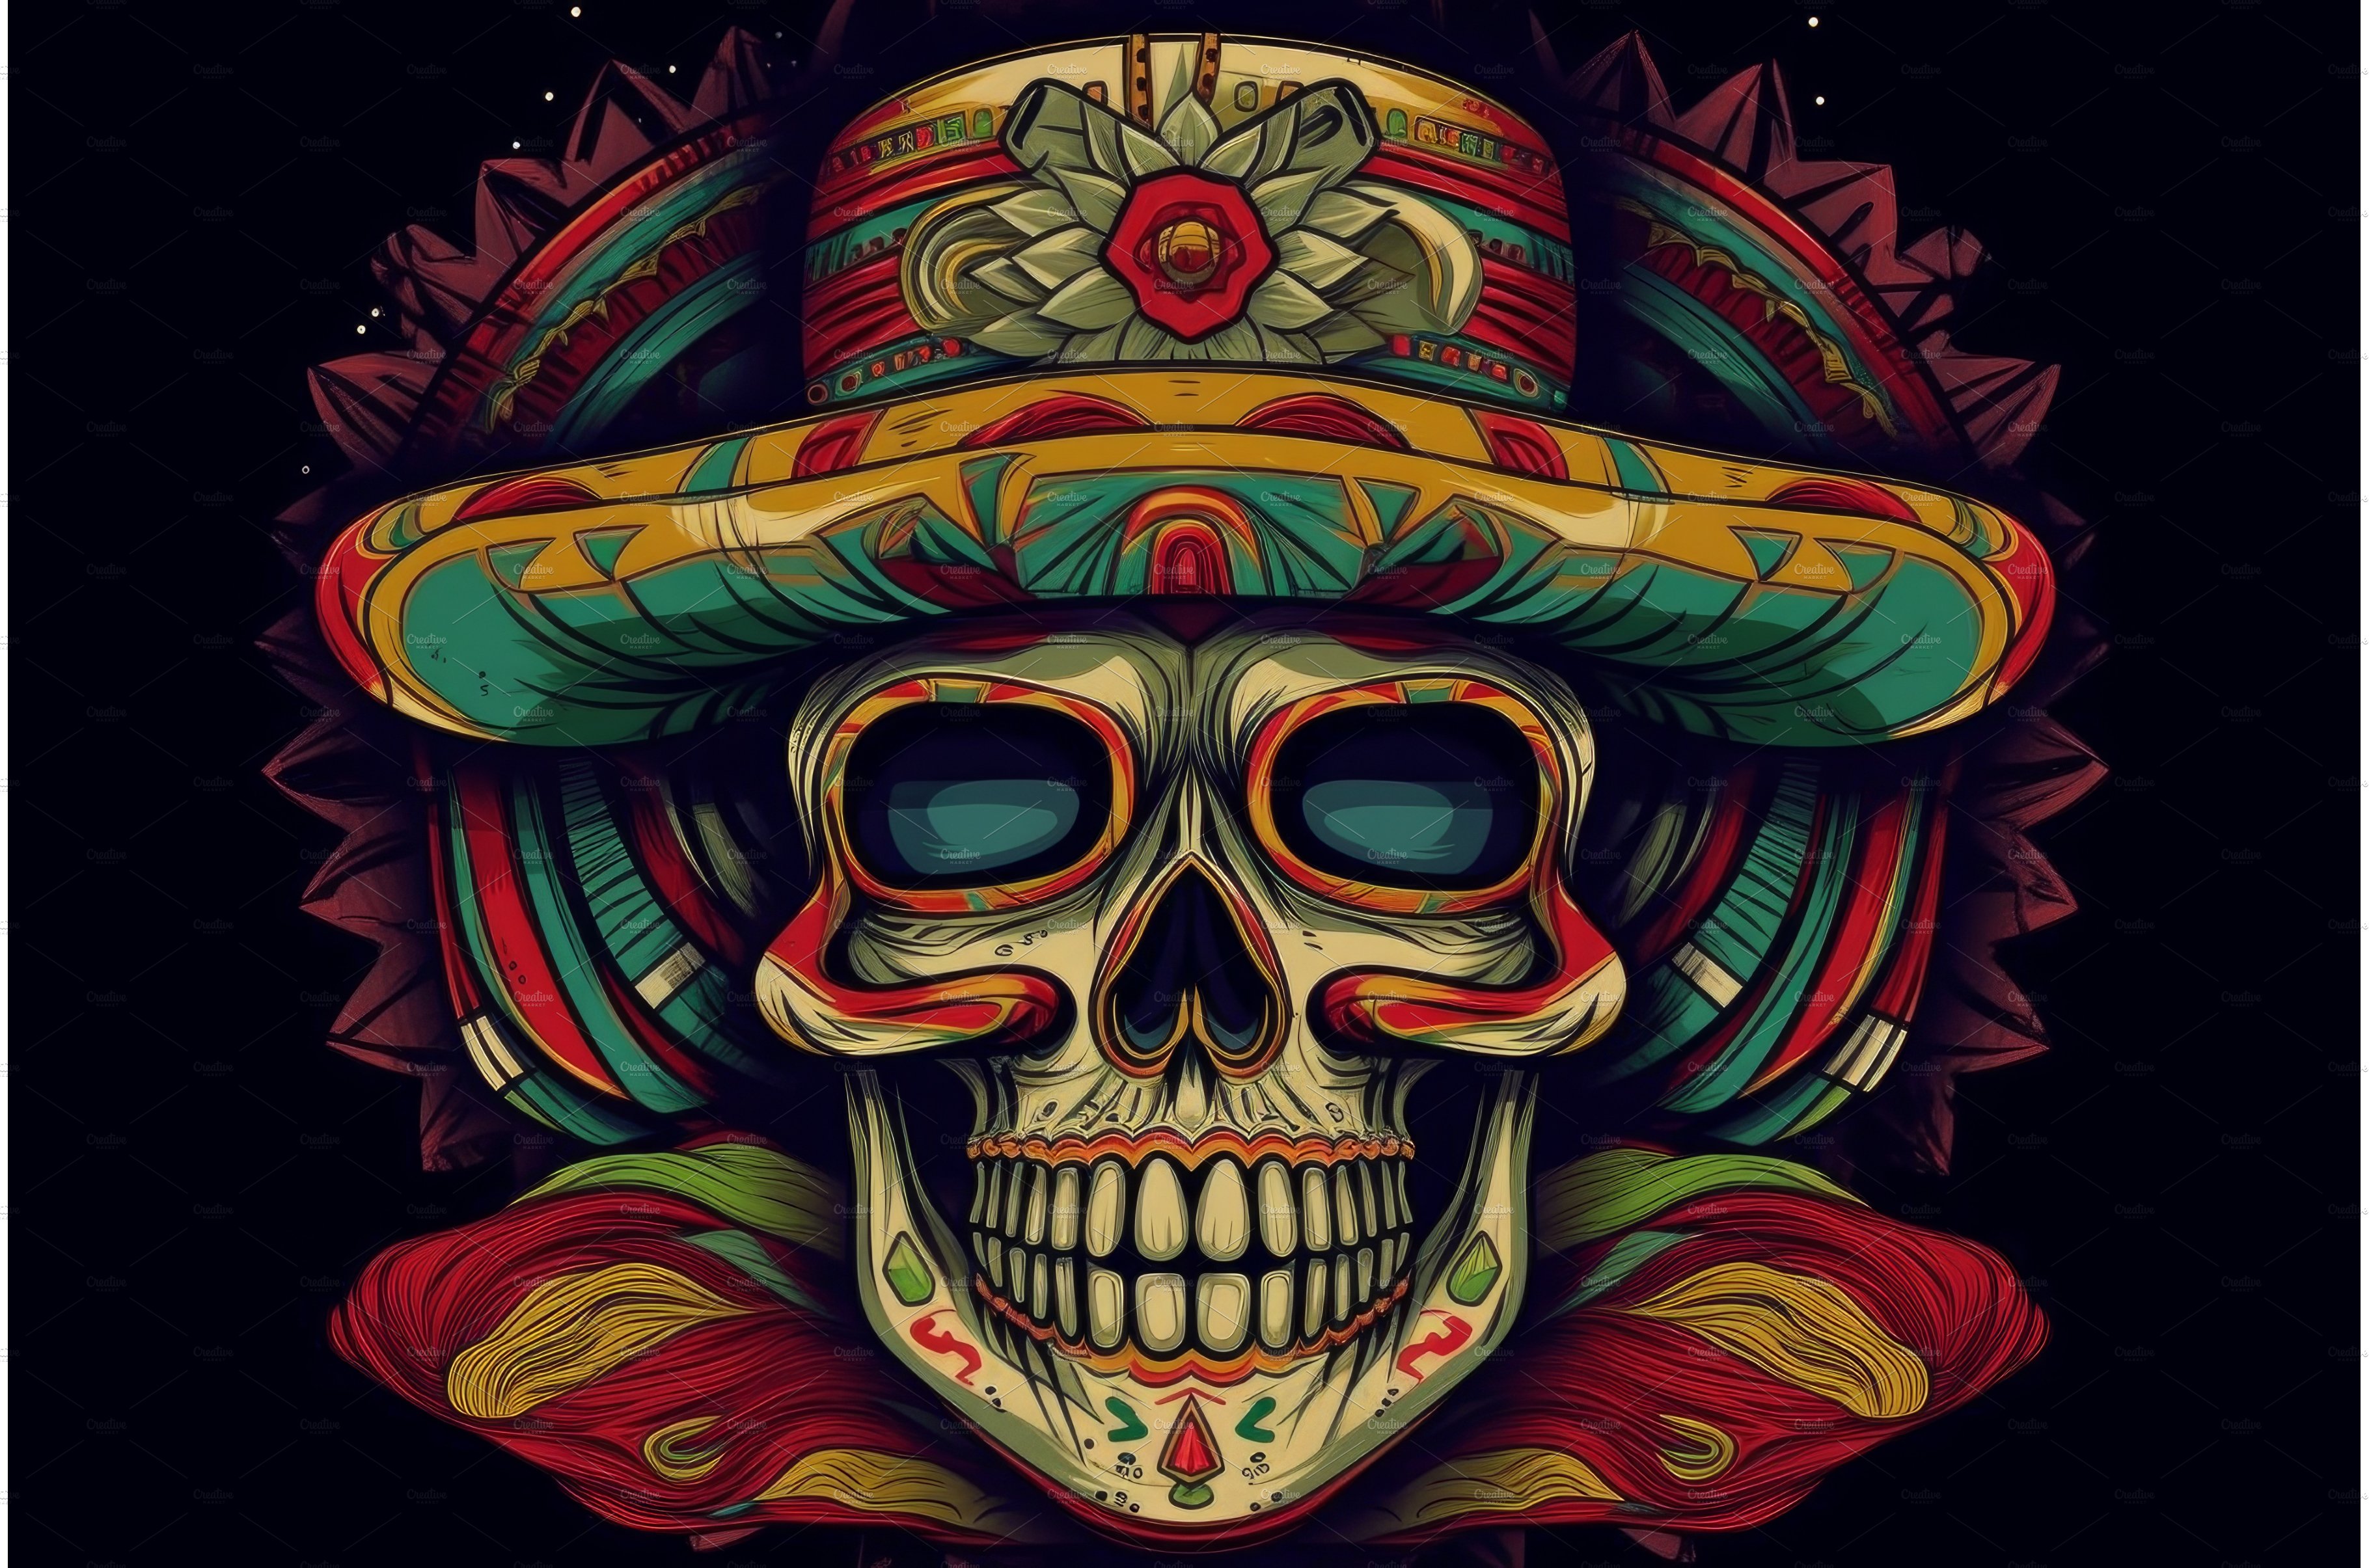 Mexican dead skull. Mexico culture cover image.